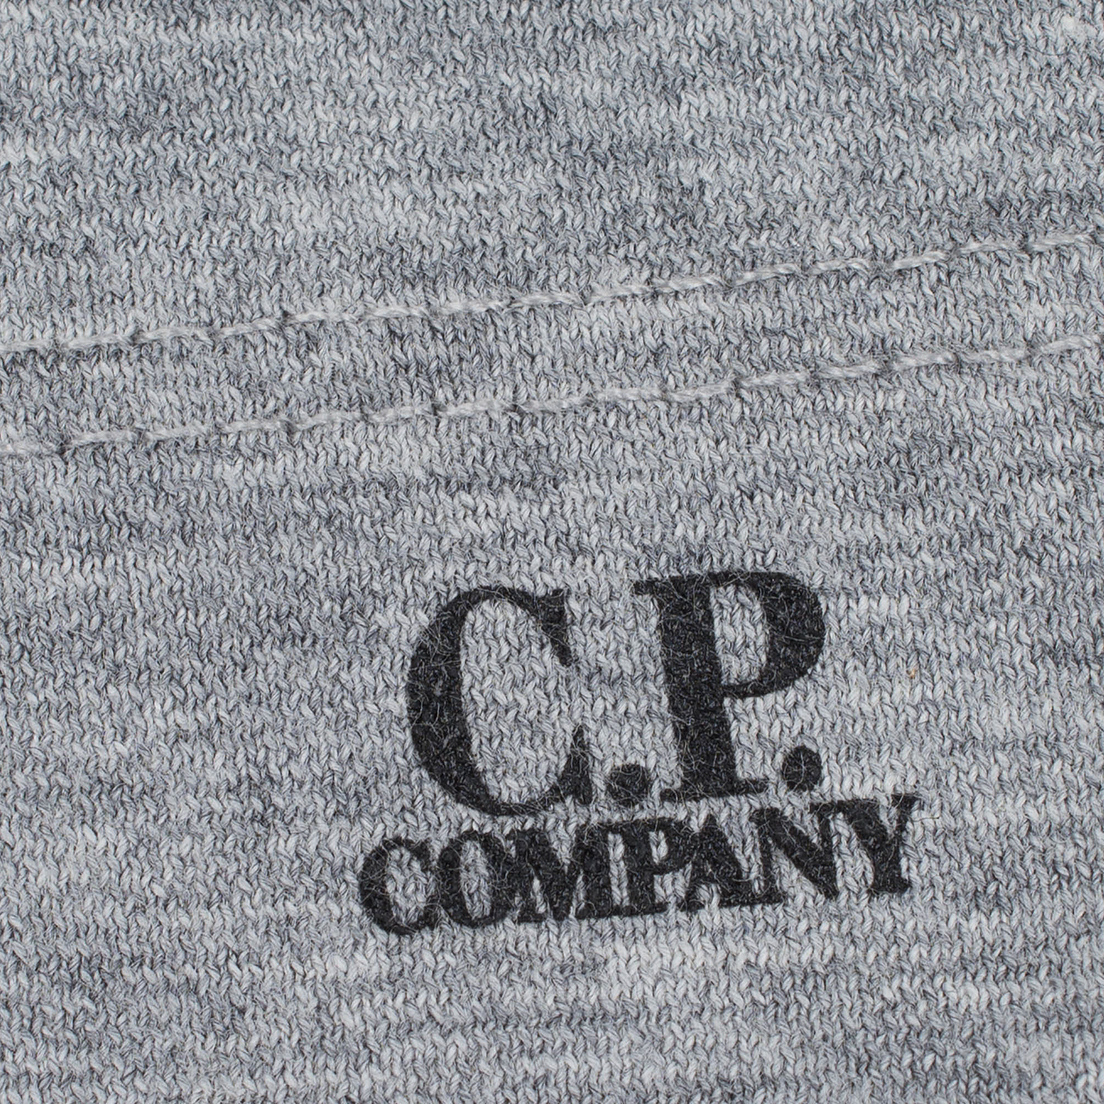 C.P. Company Мужская футболка M/C Pocket